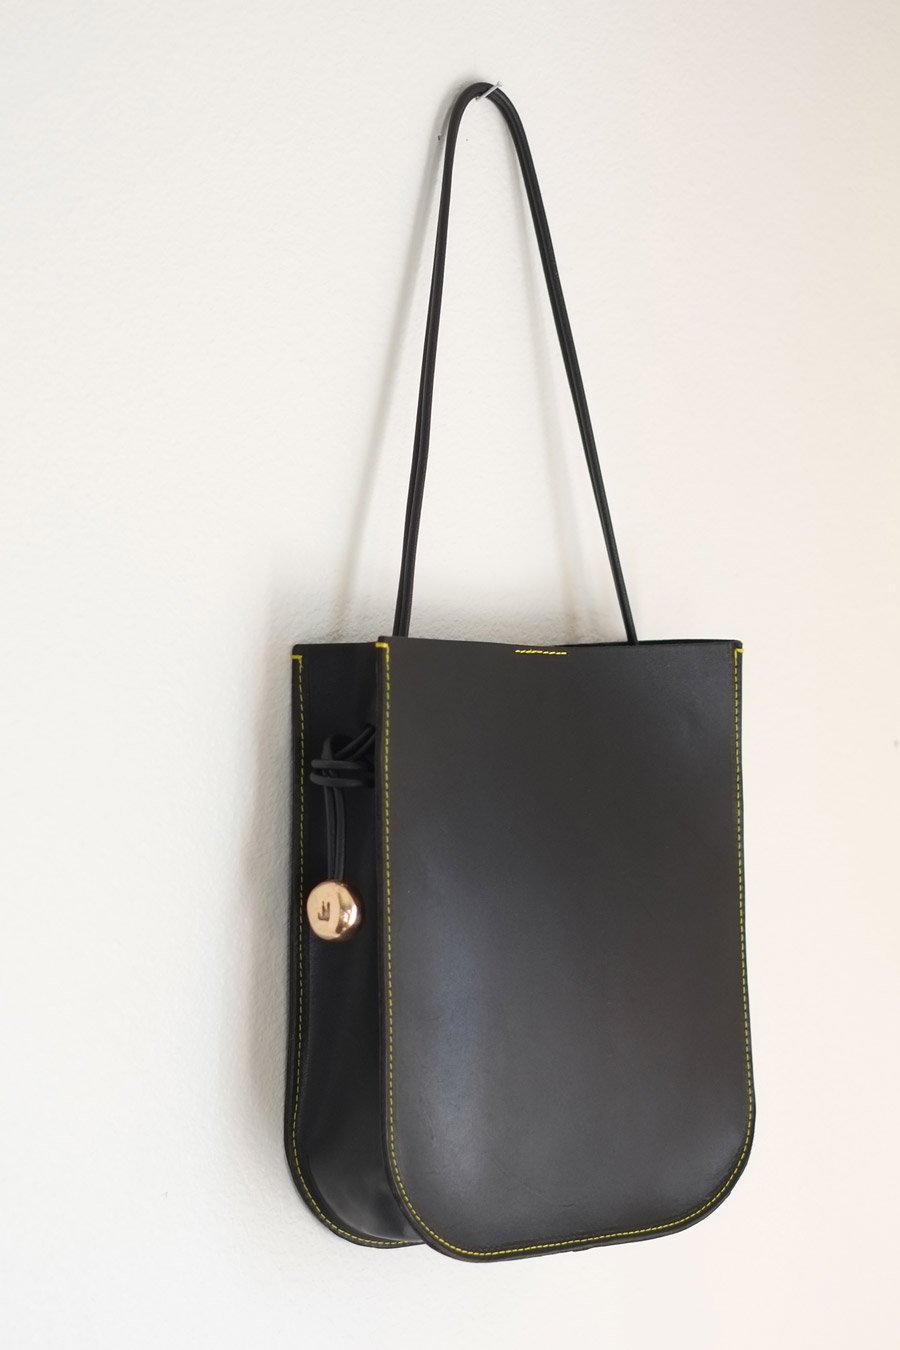 Image of black paddle bag